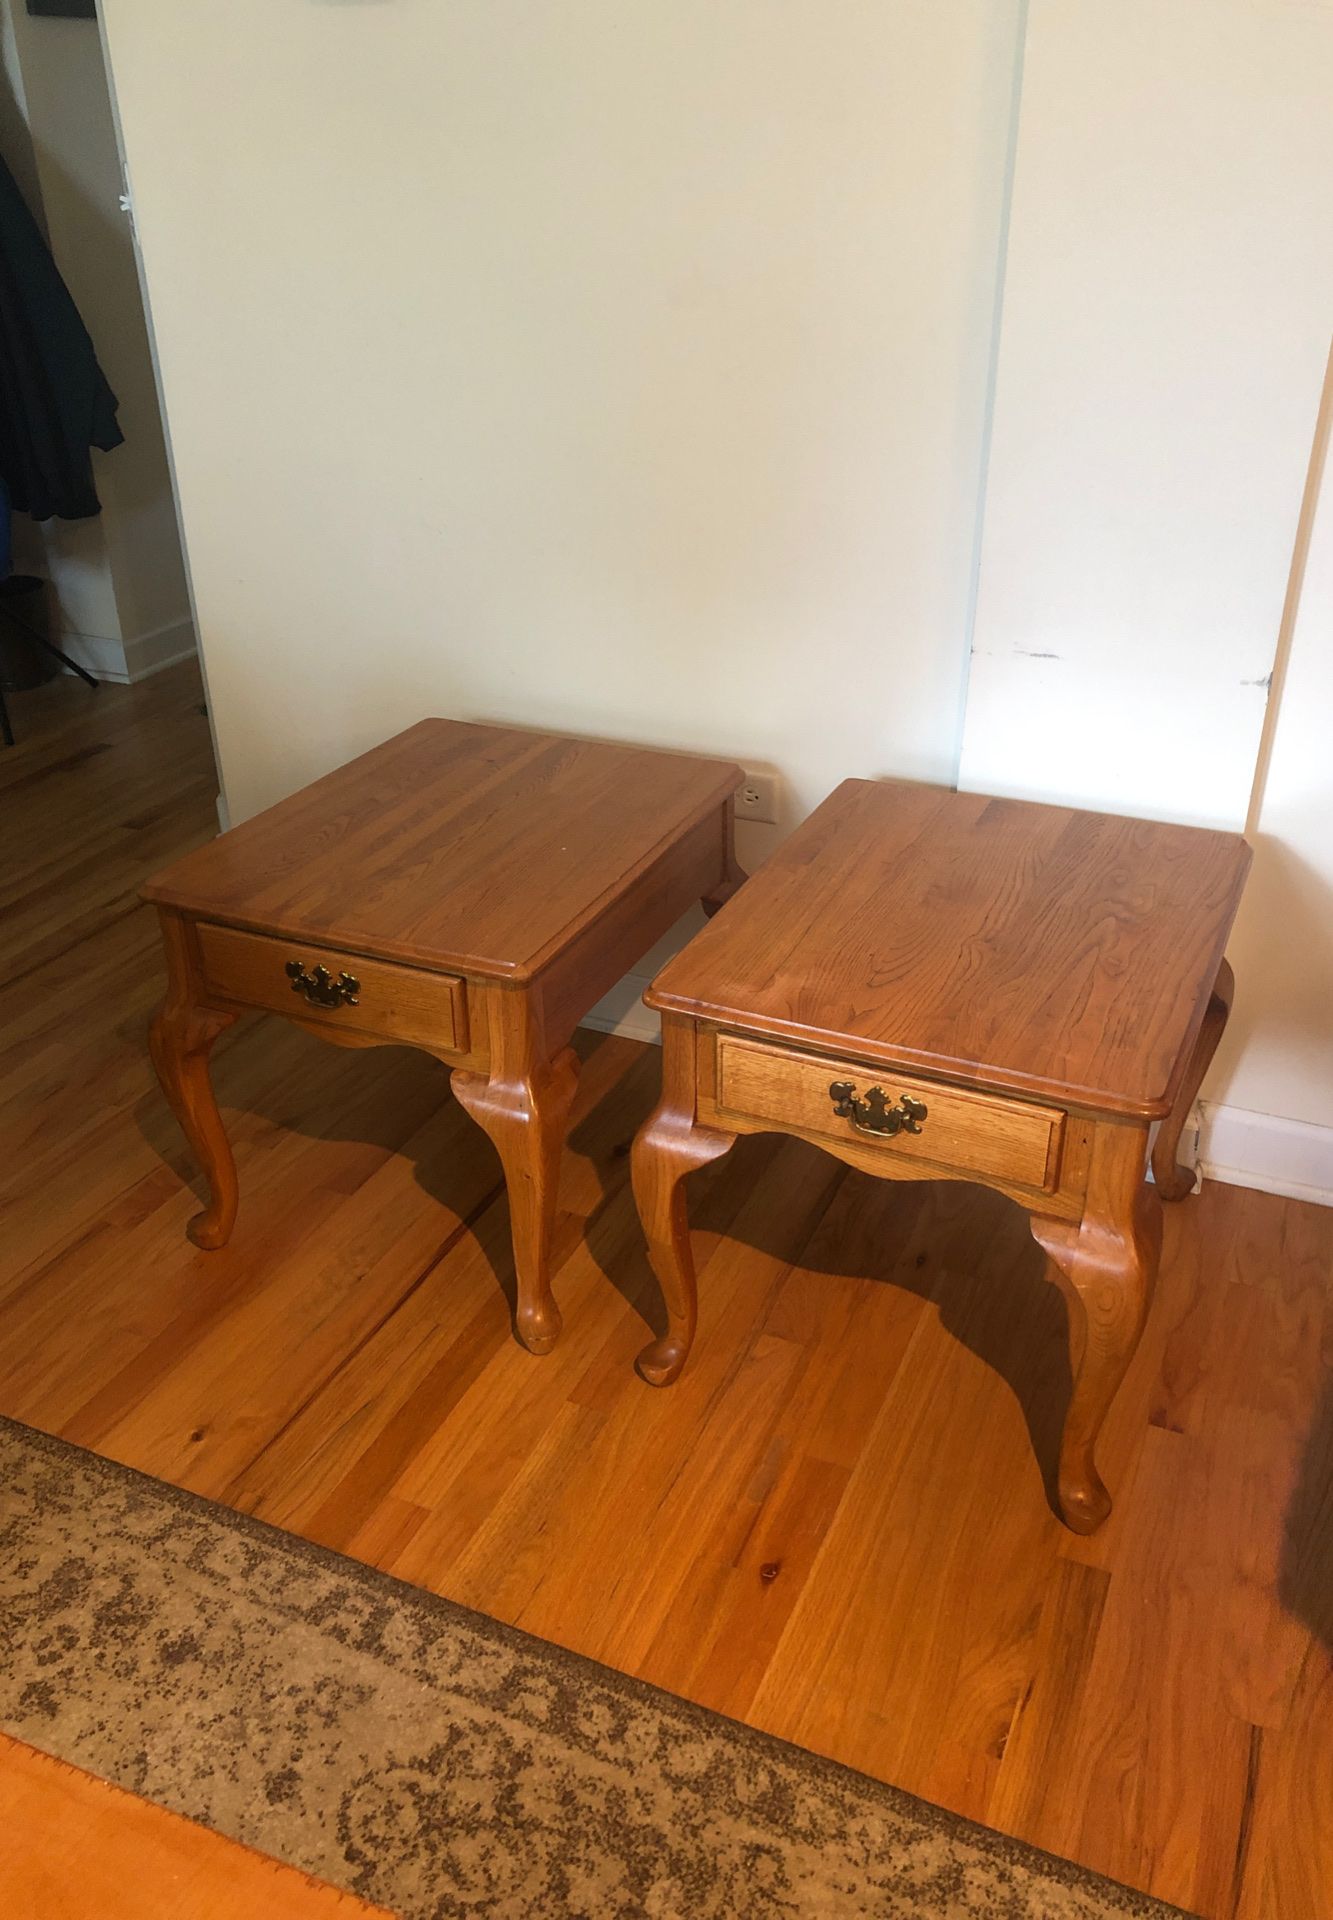 Vintage Wood End Tables